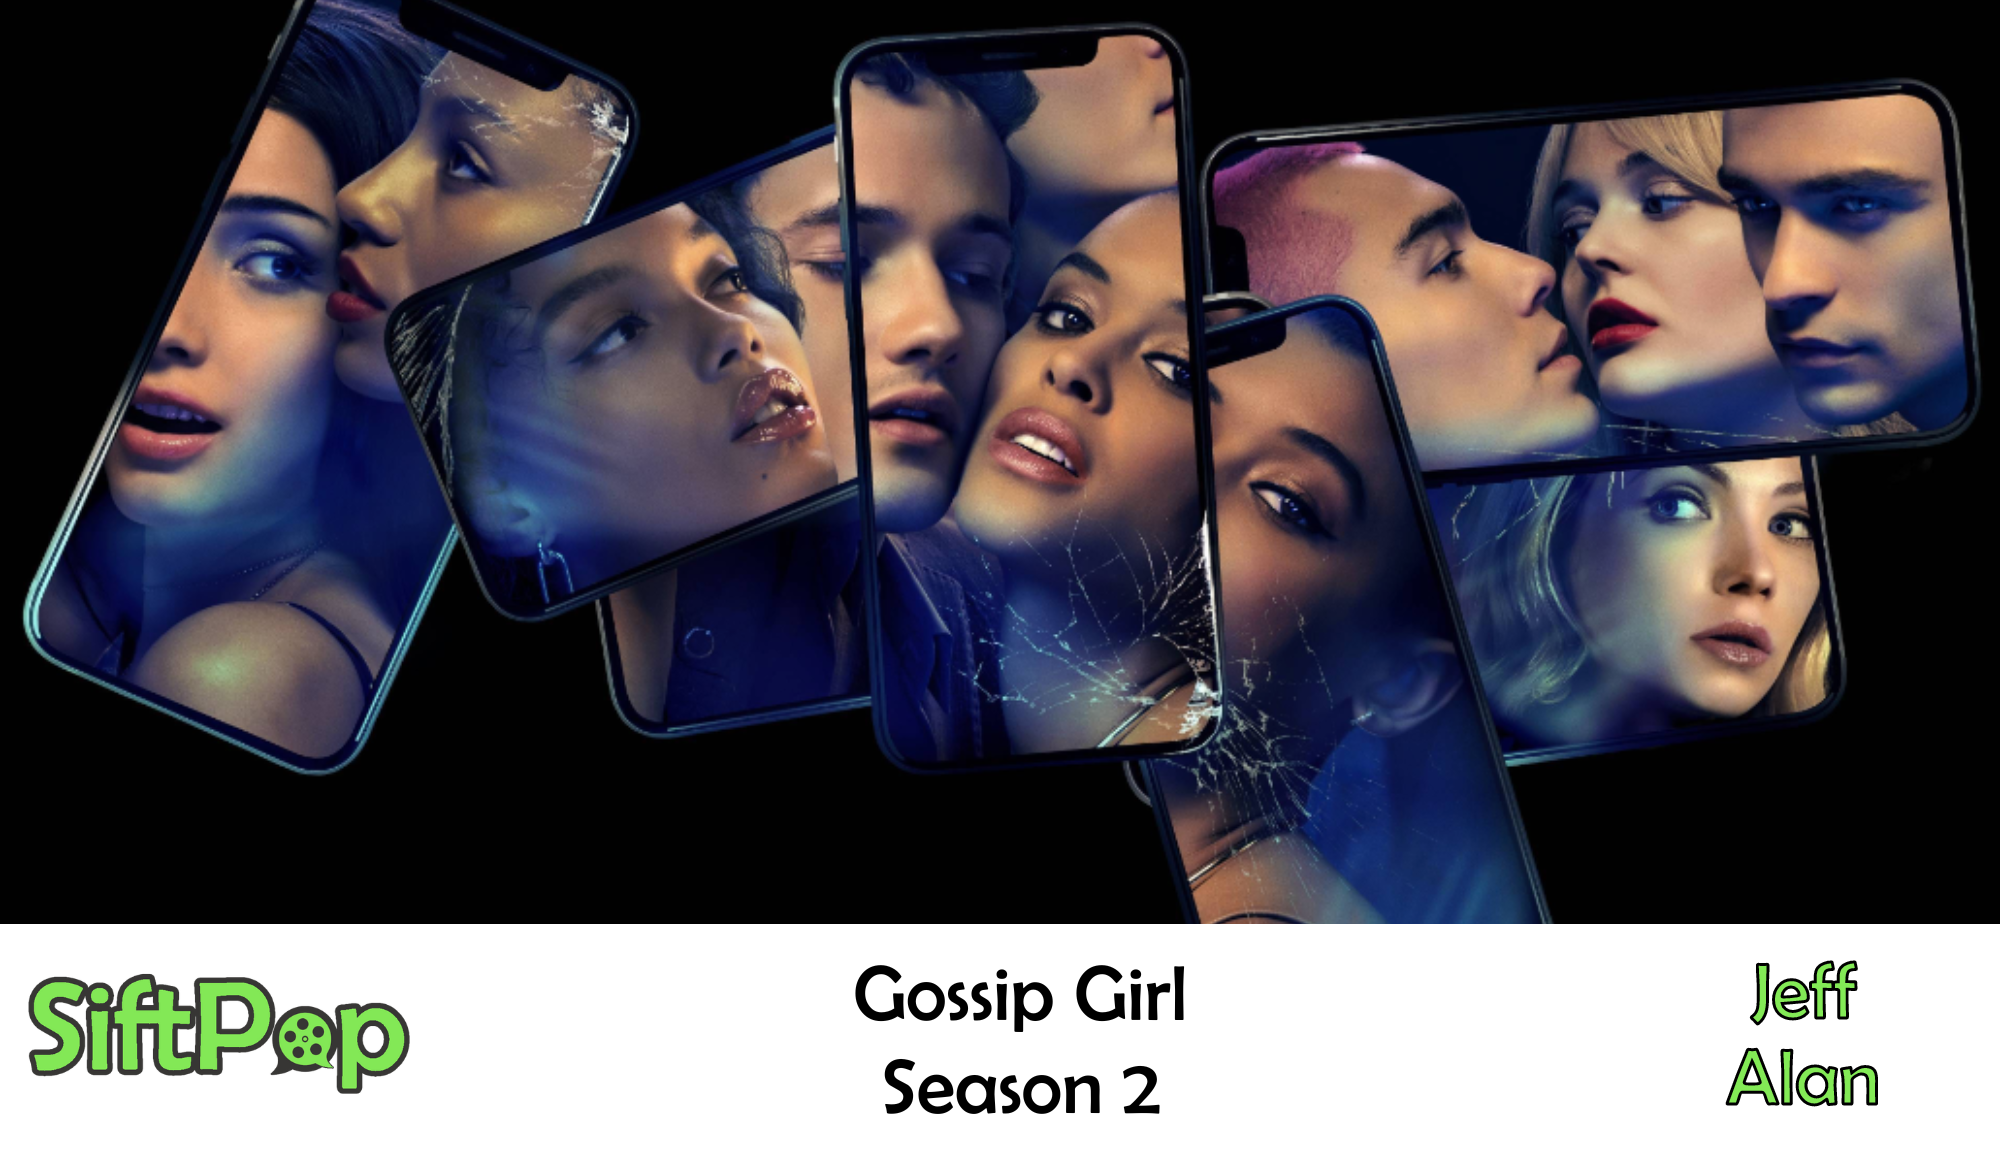 SiftPopGossip Girl Season 2 (Streaming Show Review)